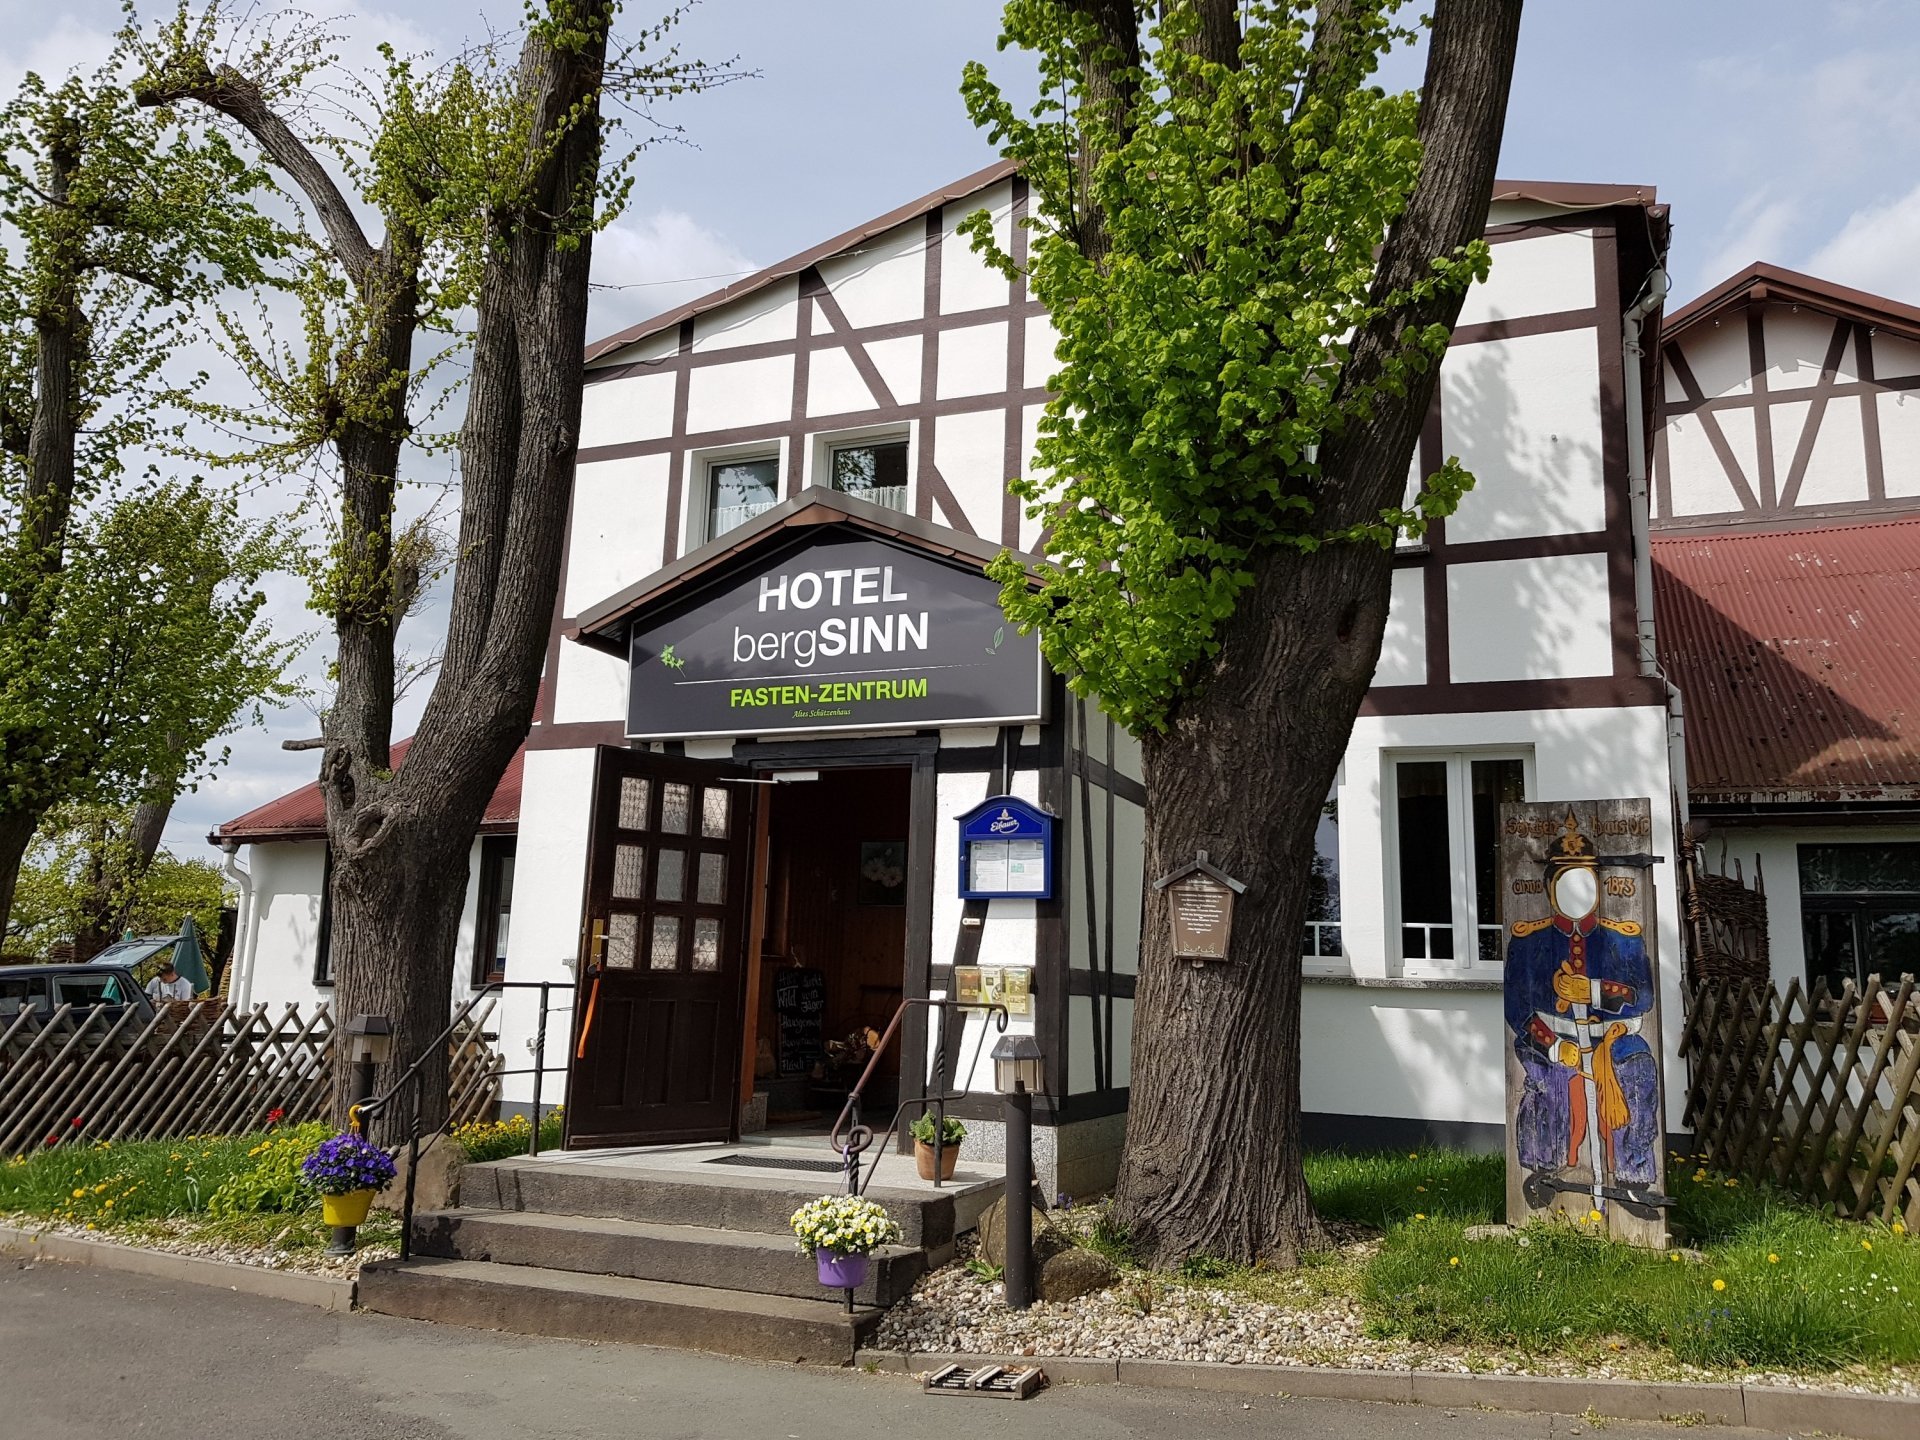 7 Tage Fasten nach Buchinger – HOTEL bergSINN Fastenzentrum  in Obercunnersdorf, Sachsen inkl. All Inclusive